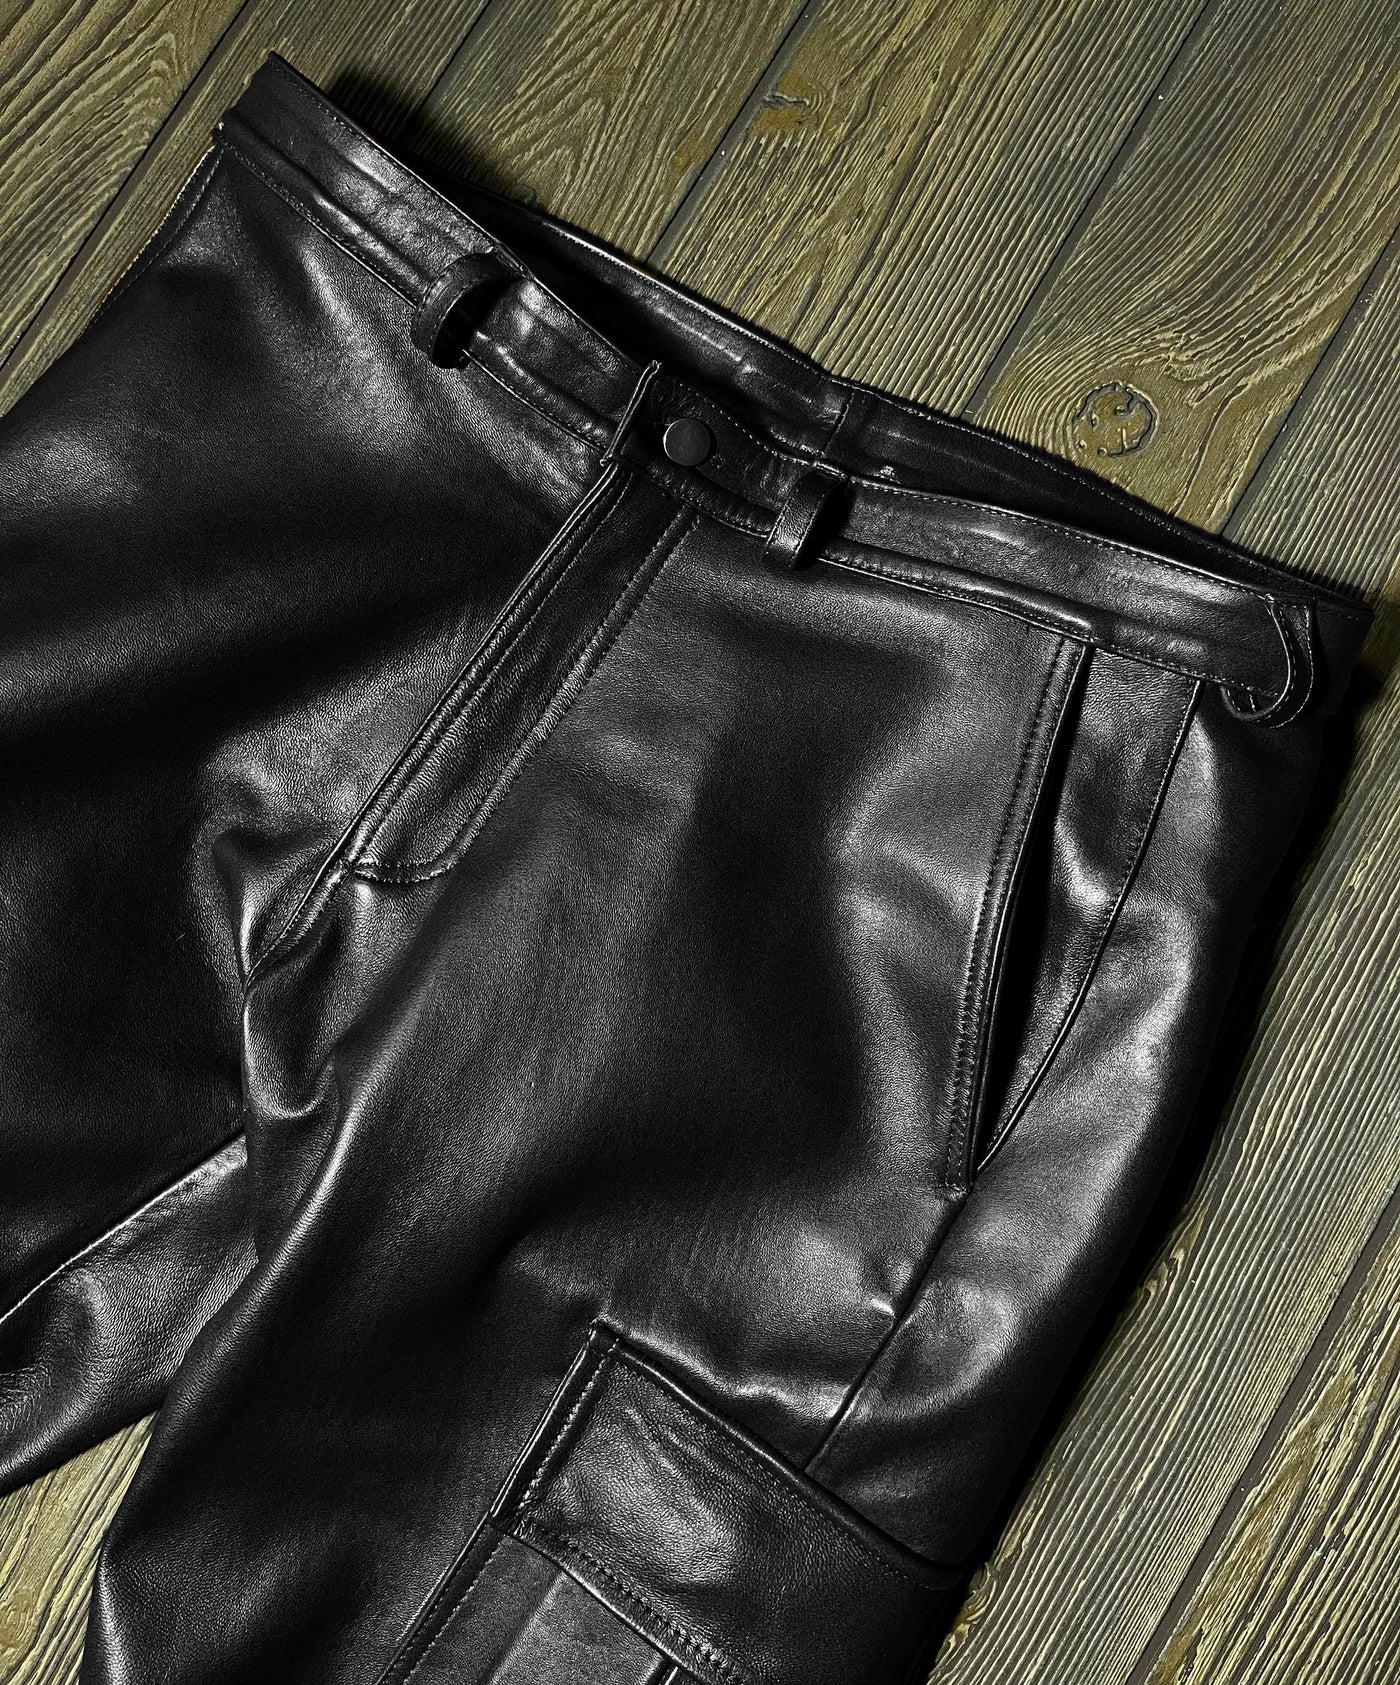 Cargo darkest black leahter pants